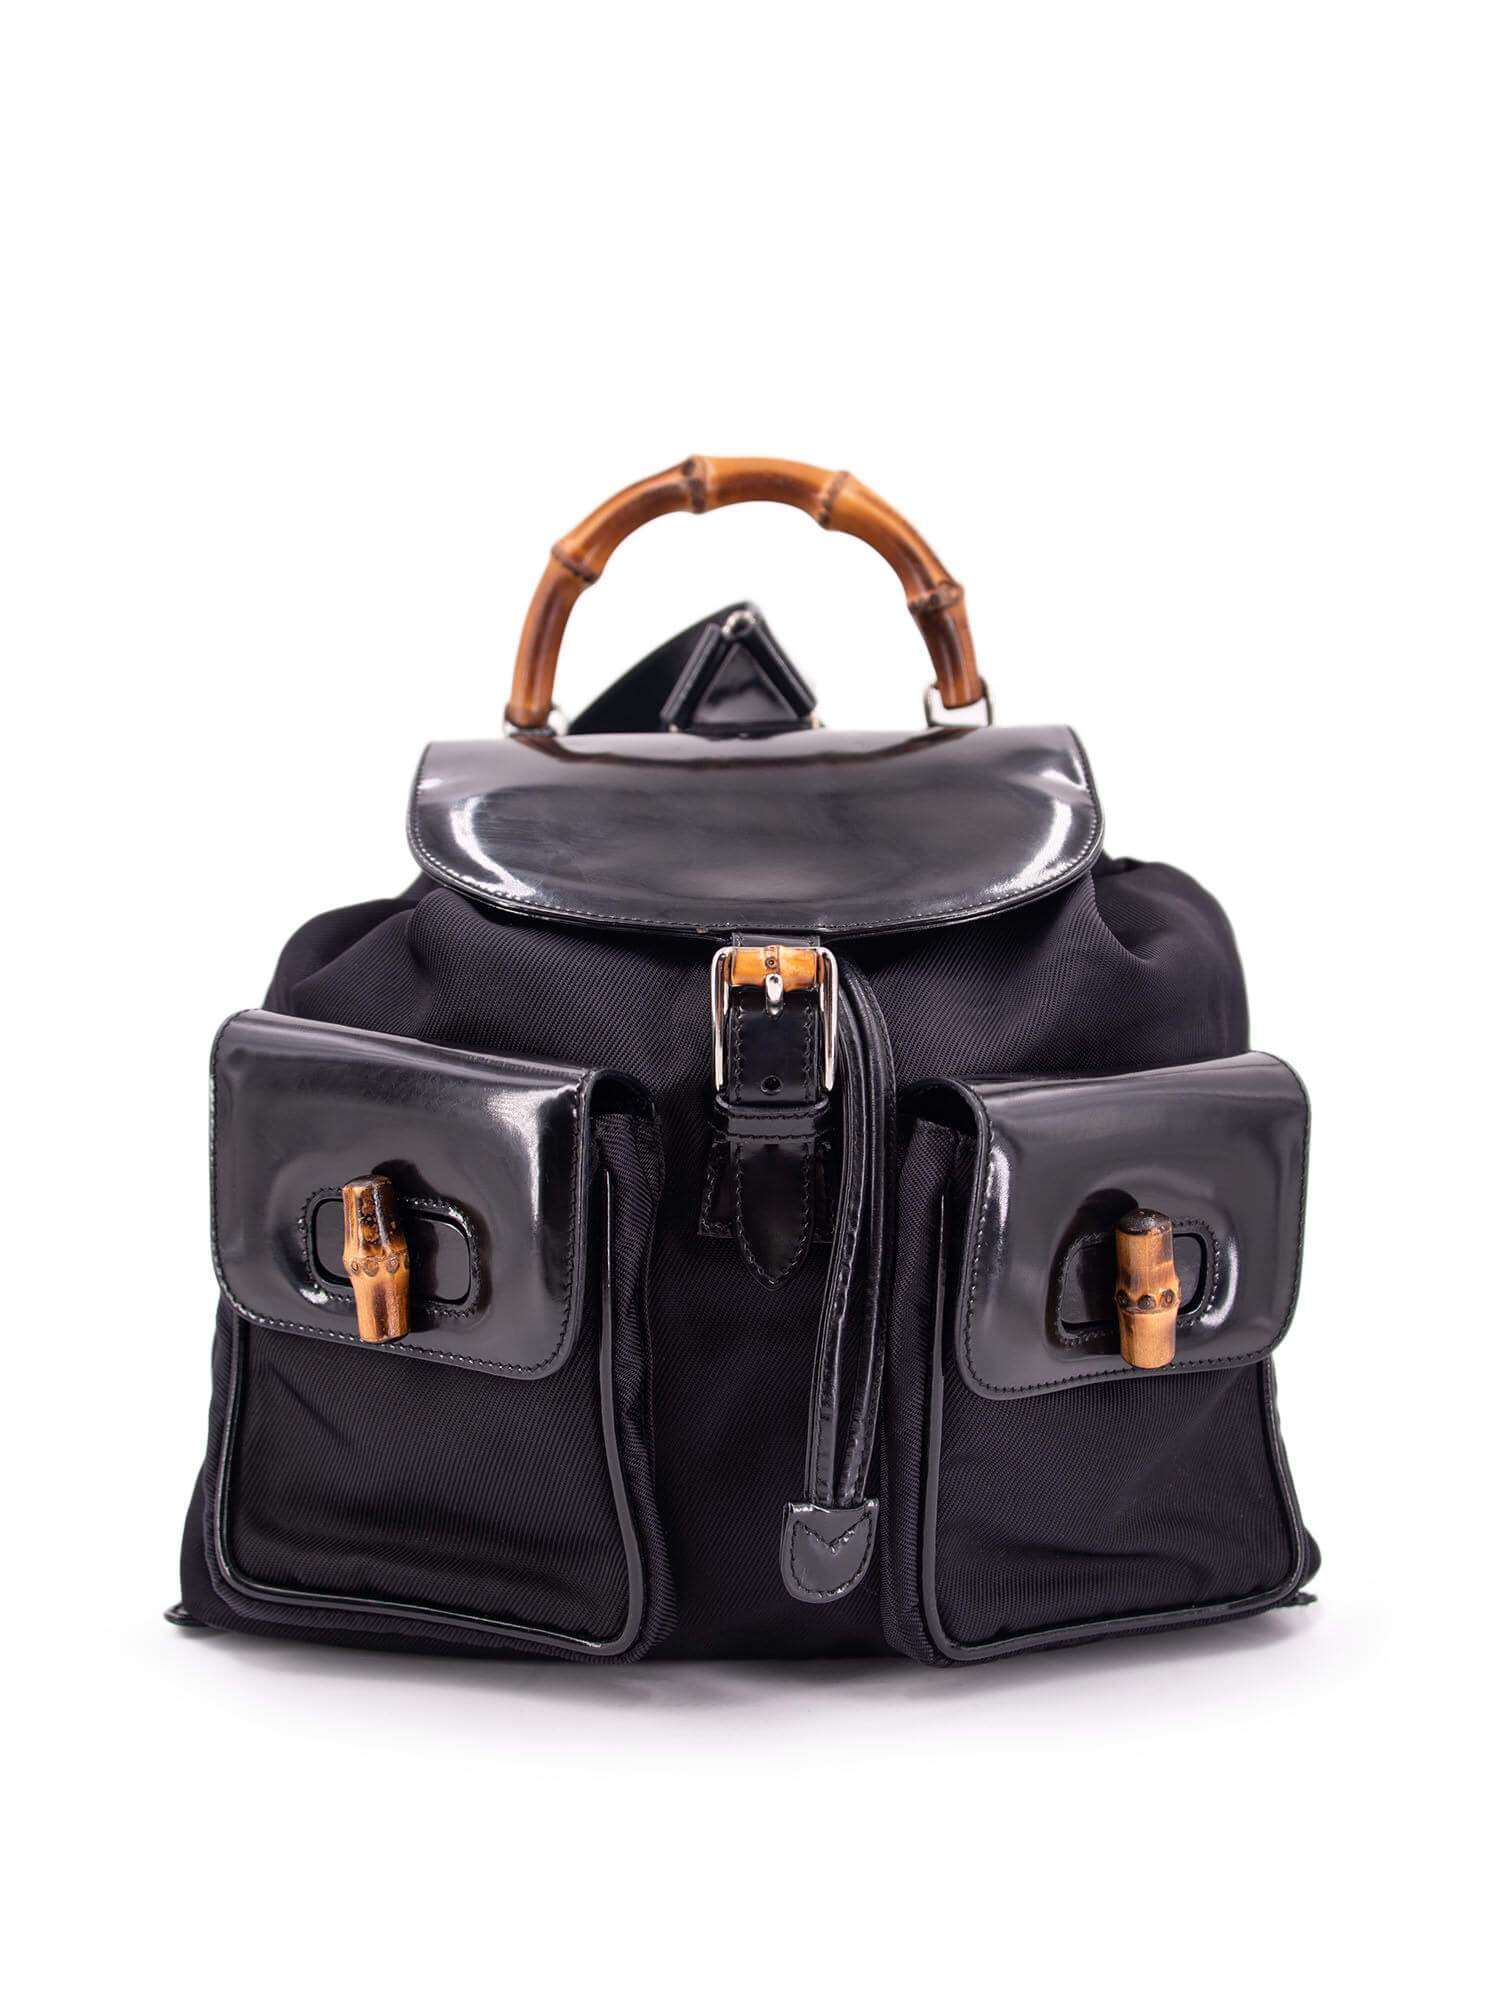 Gucci Patent Leather Bamboo Medium Backpack Black-designer resale